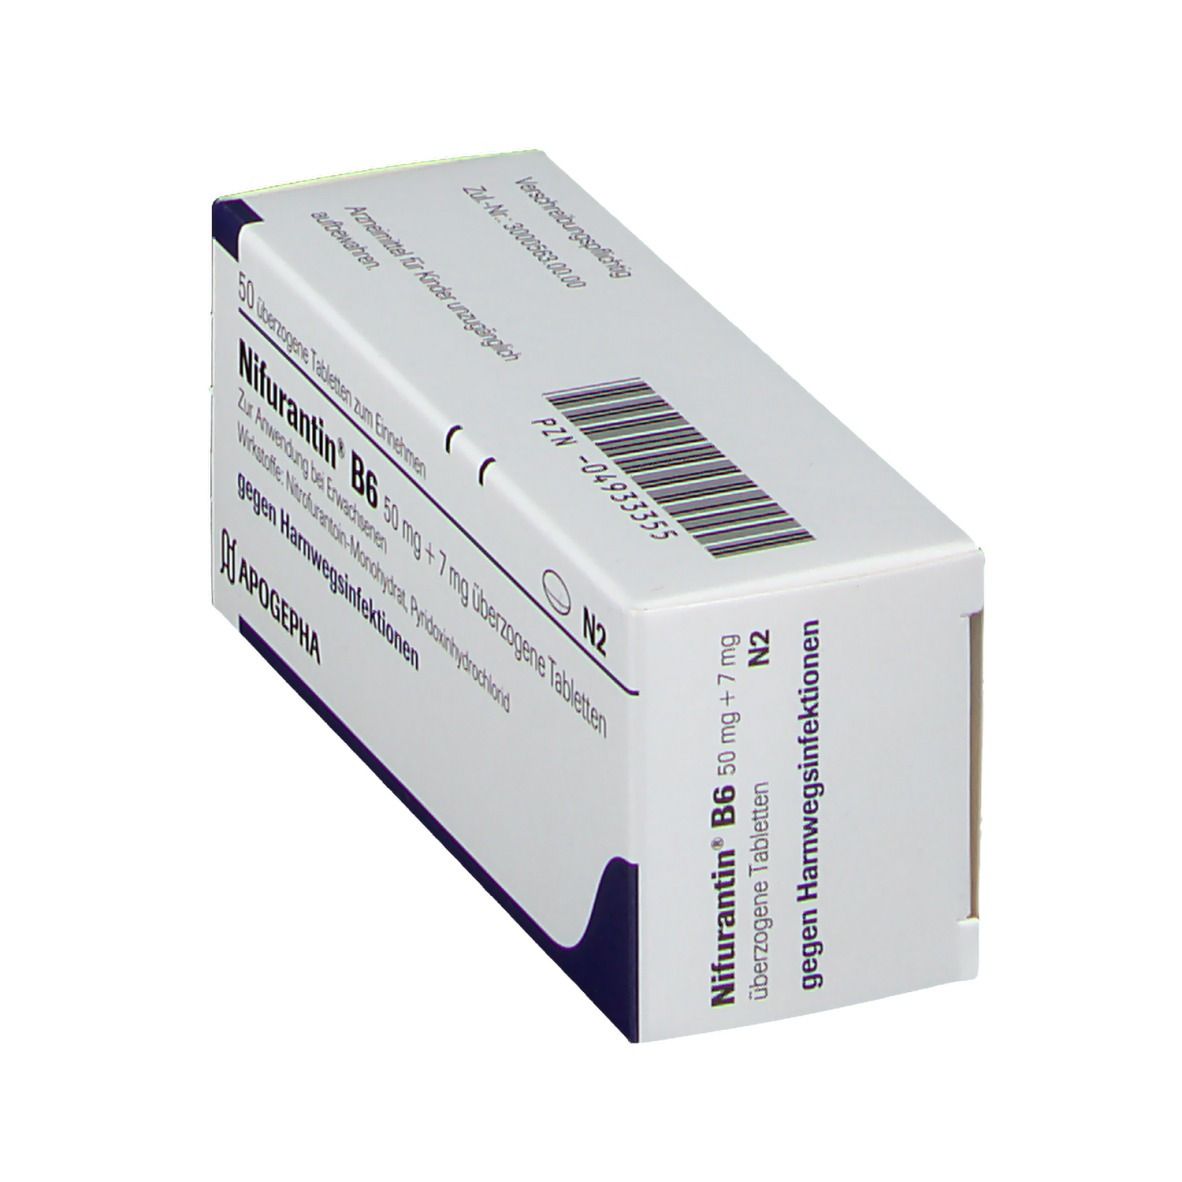 Nifurantin® B 6